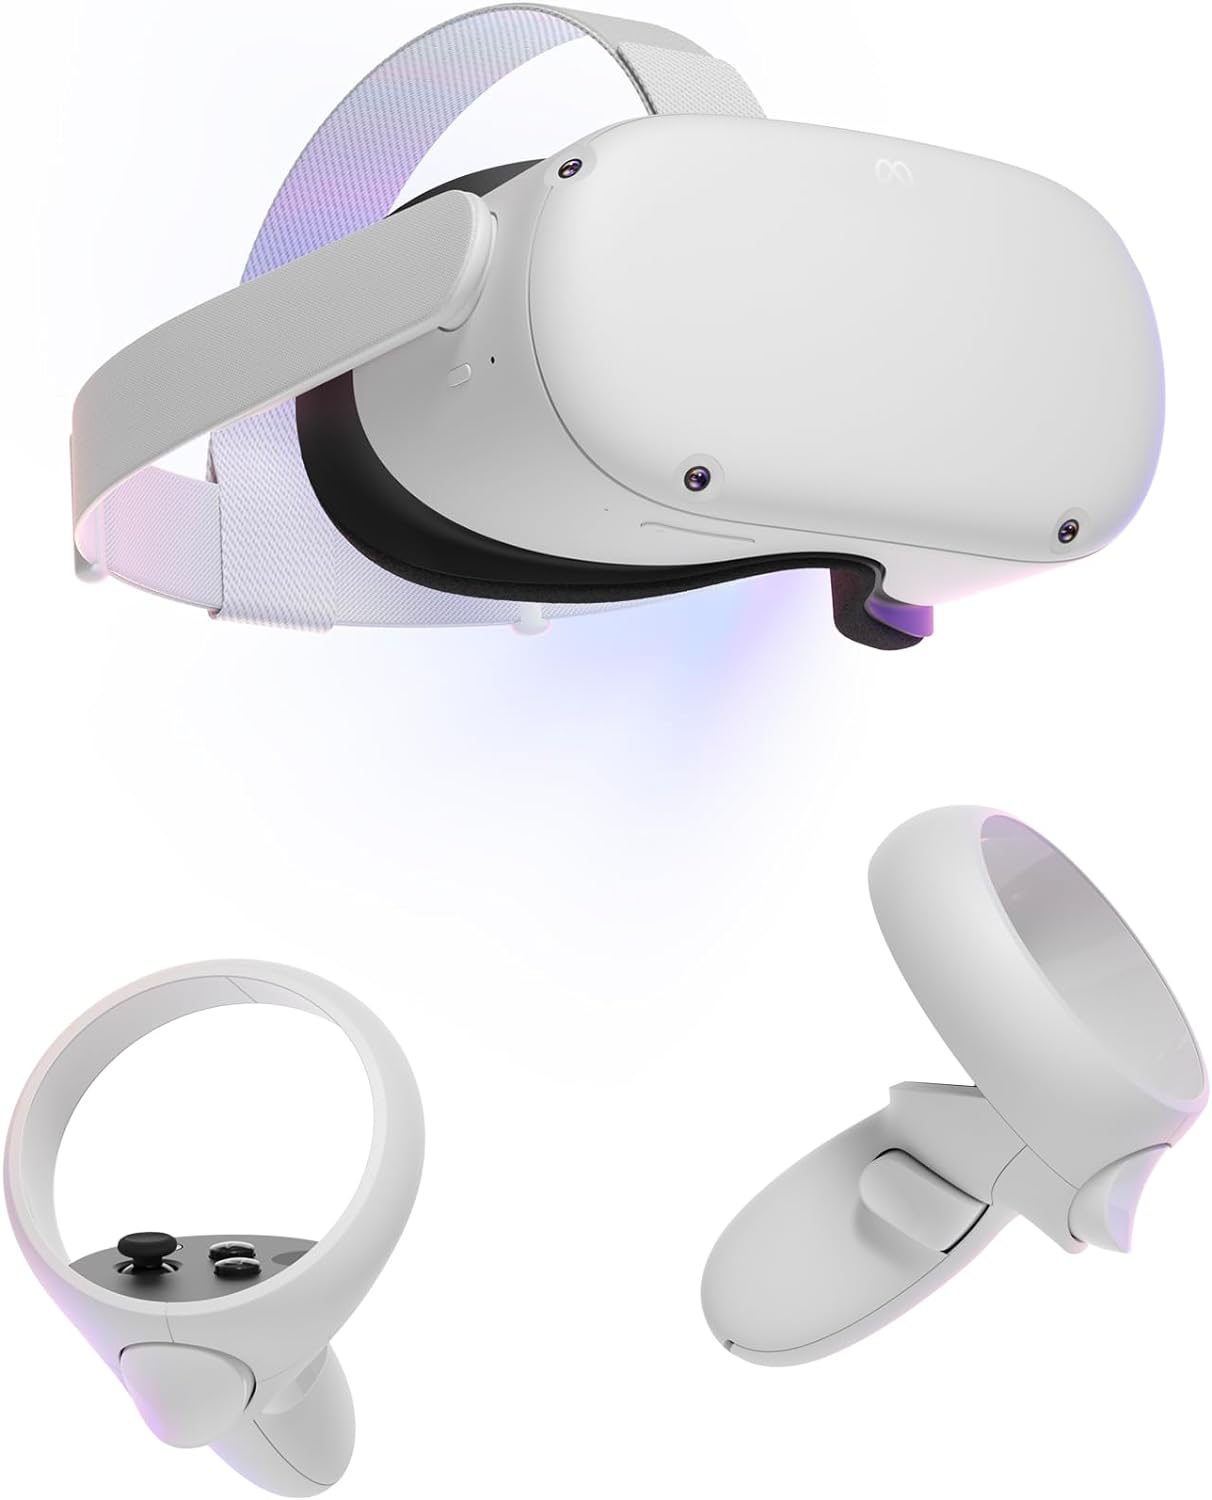 Meta Quest 2 - Virtual Reality Headset - 128 GB - $199